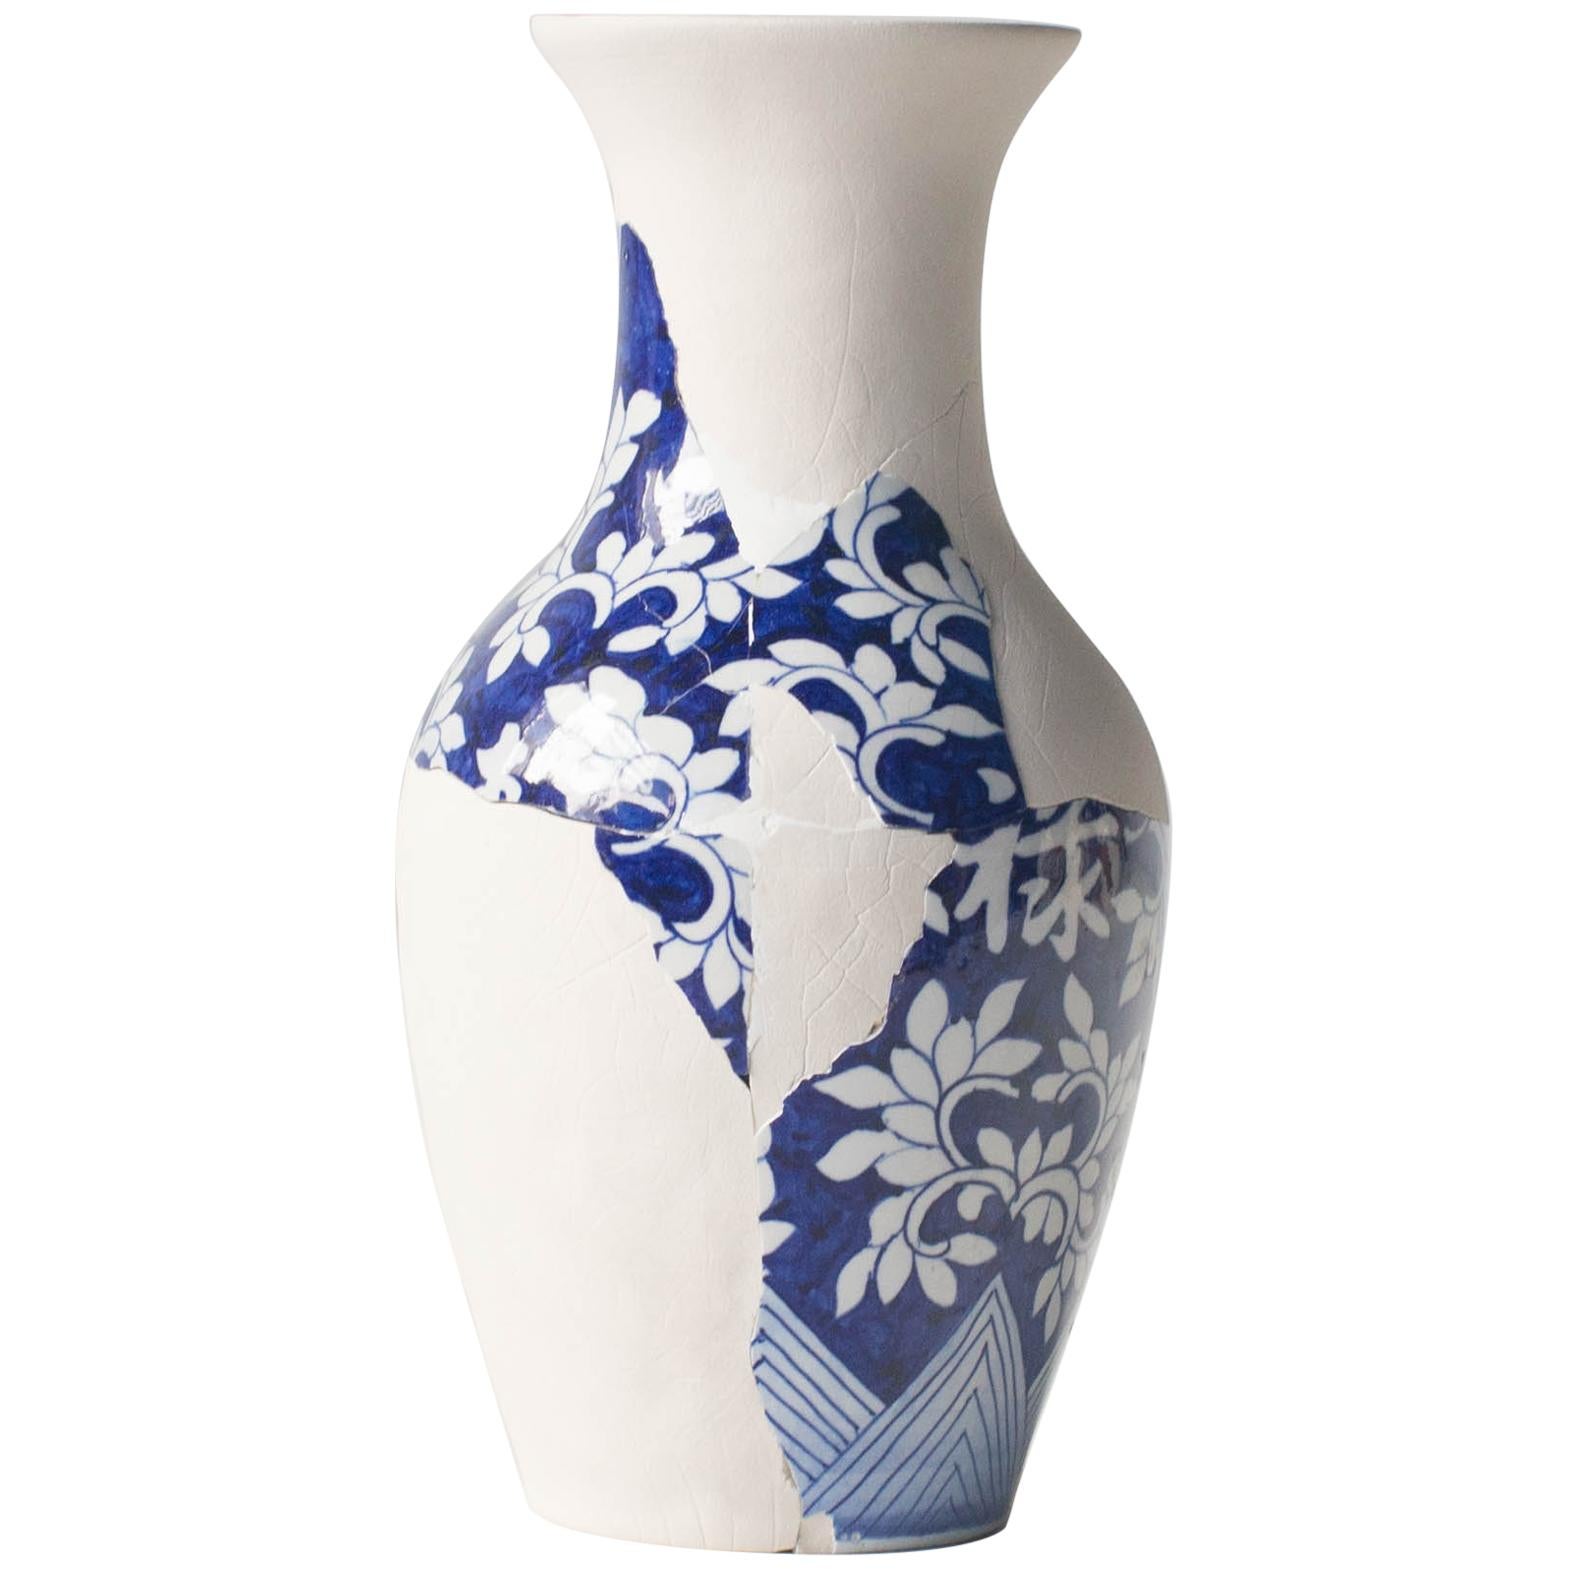 Reconstructed Ceramics #2 Contemporary Zen Japonism Style